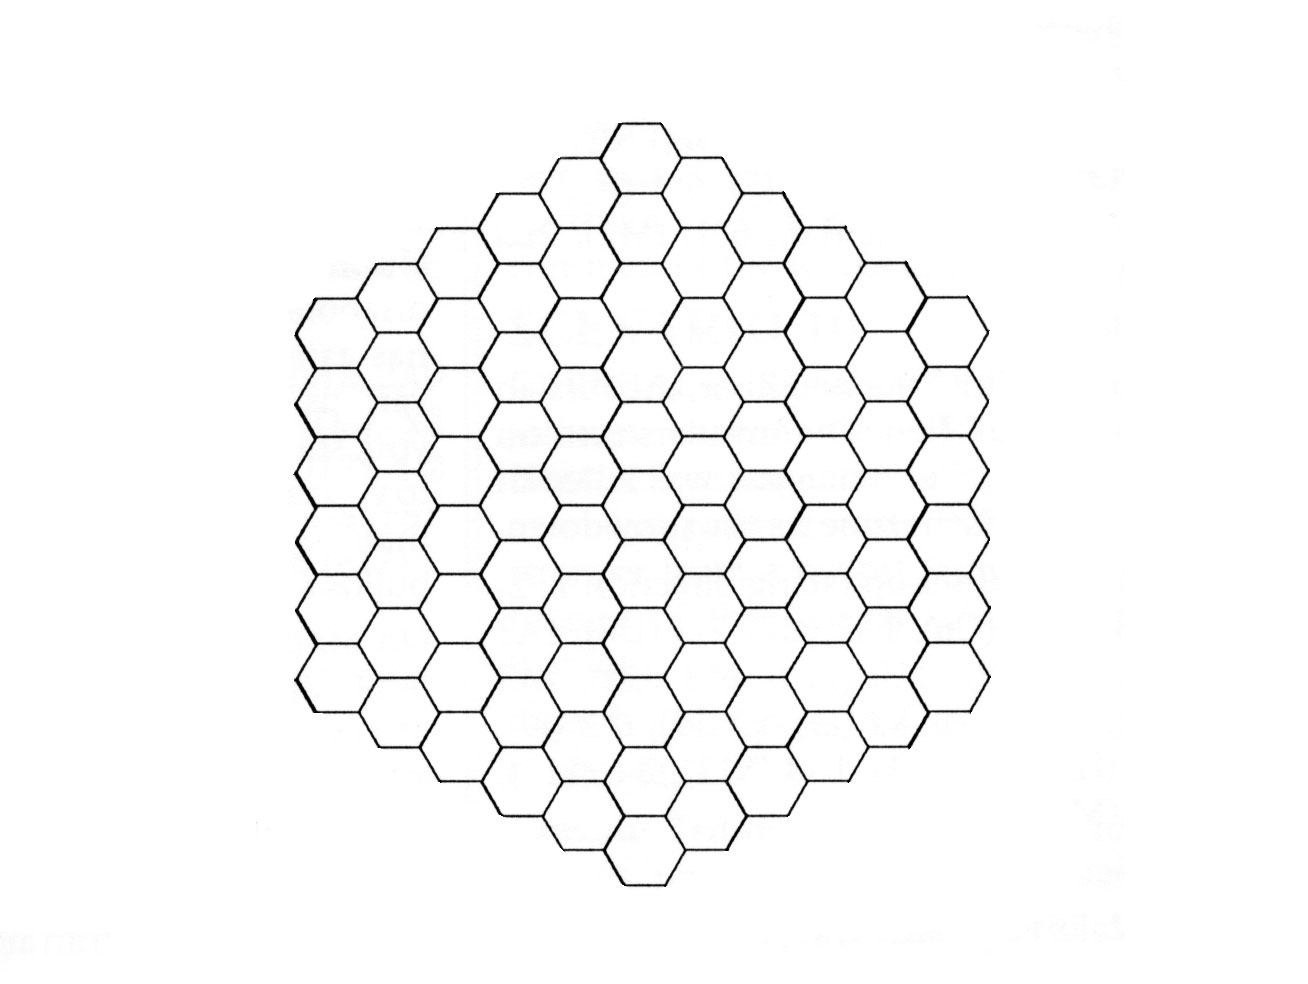 Hexagon+grid+photoshop